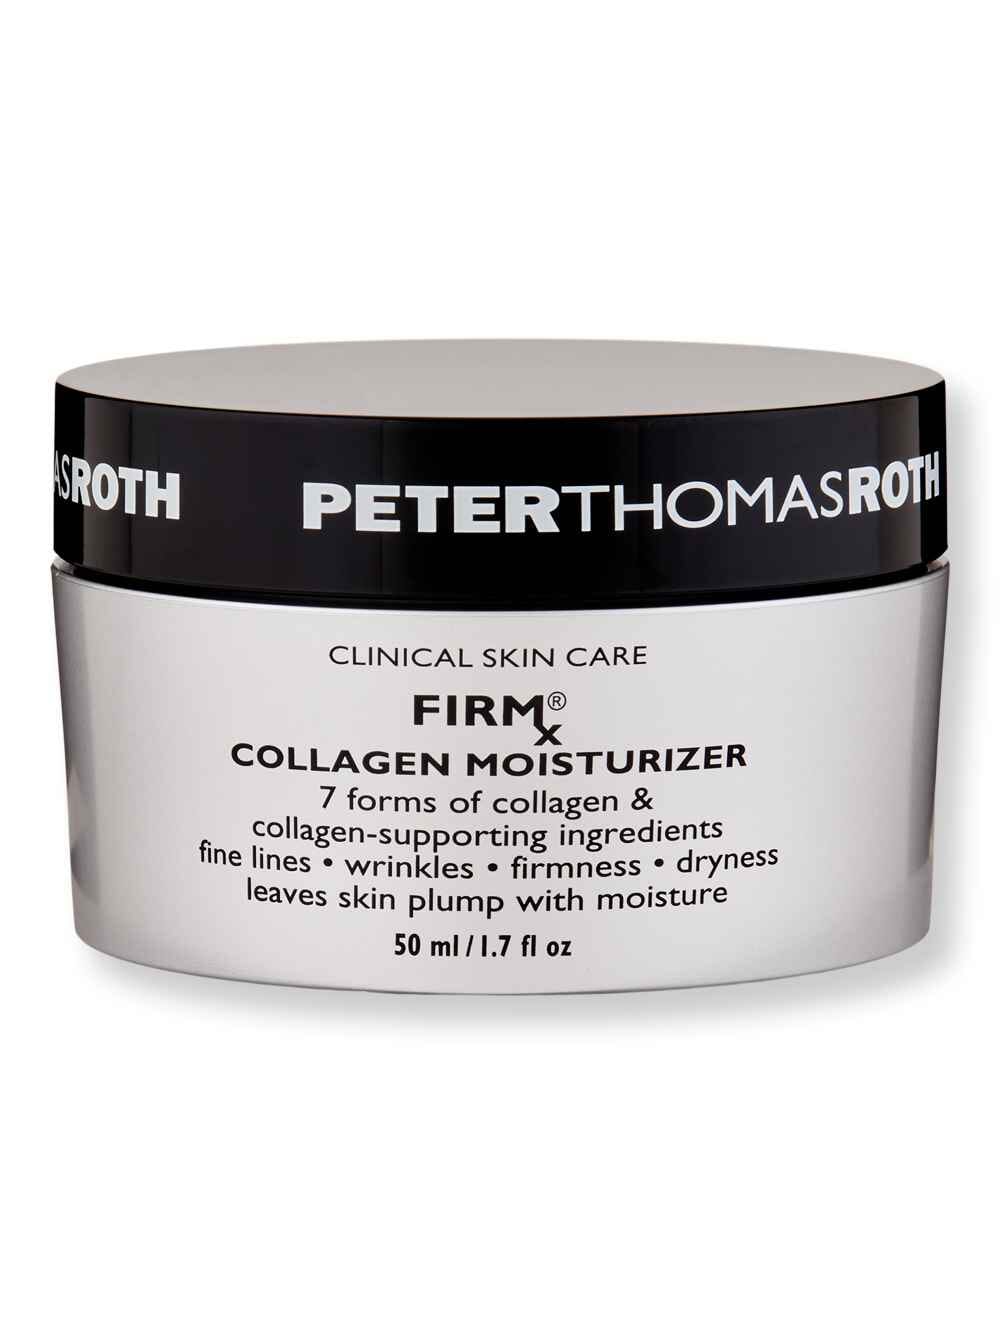 Peter Thomas Roth Peter Thomas Roth Firmx Collagen Moisturizer 1.7 oz50 ml Face Moisturizers 